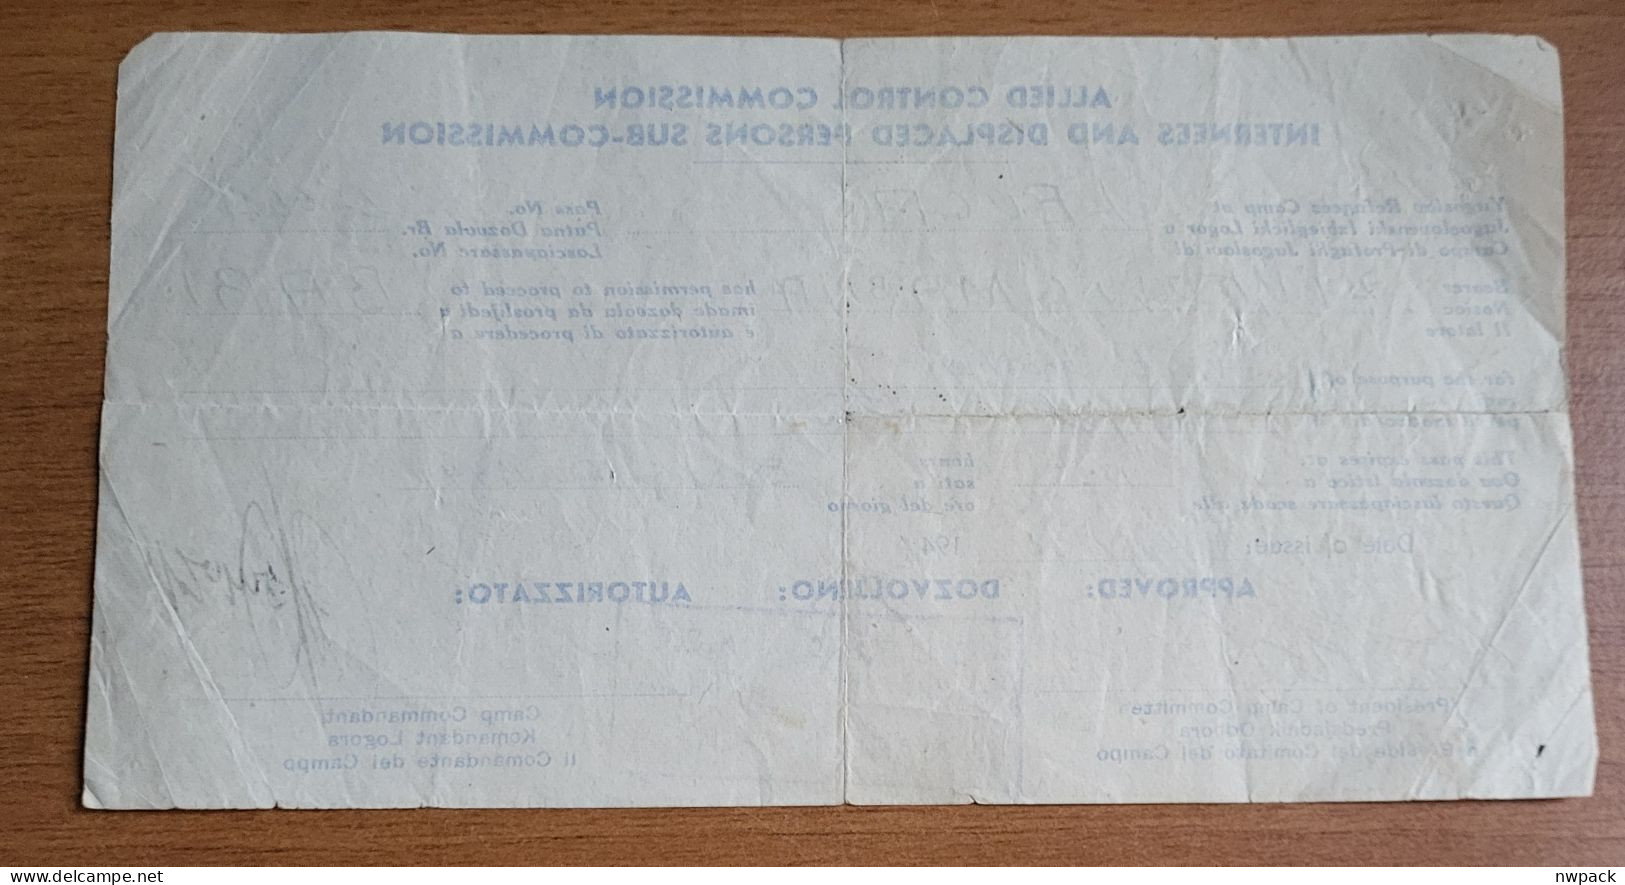 Document Yugoslav Refugees Camp, Pass No. L- 692 To BARI 1944. From Leuca, Camp Commandant S. Maria De Leuca - Documents Historiques